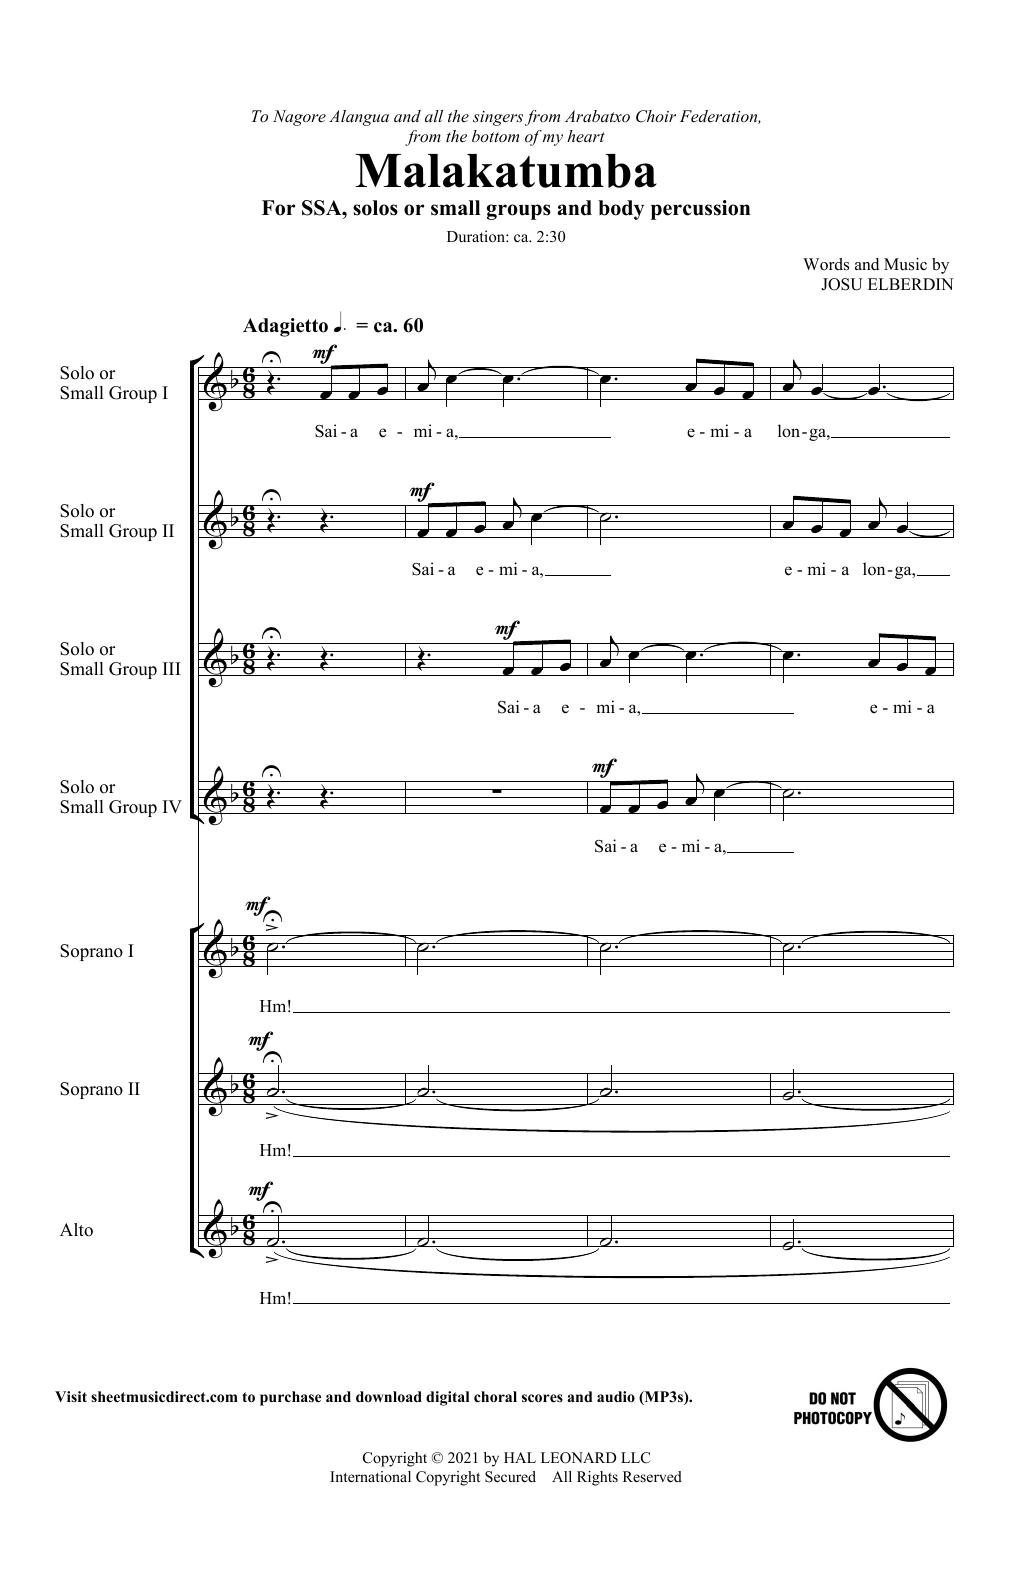 Download Josu Elberdin Malakatumba Sheet Music and learn how to play SSA Choir PDF digital score in minutes